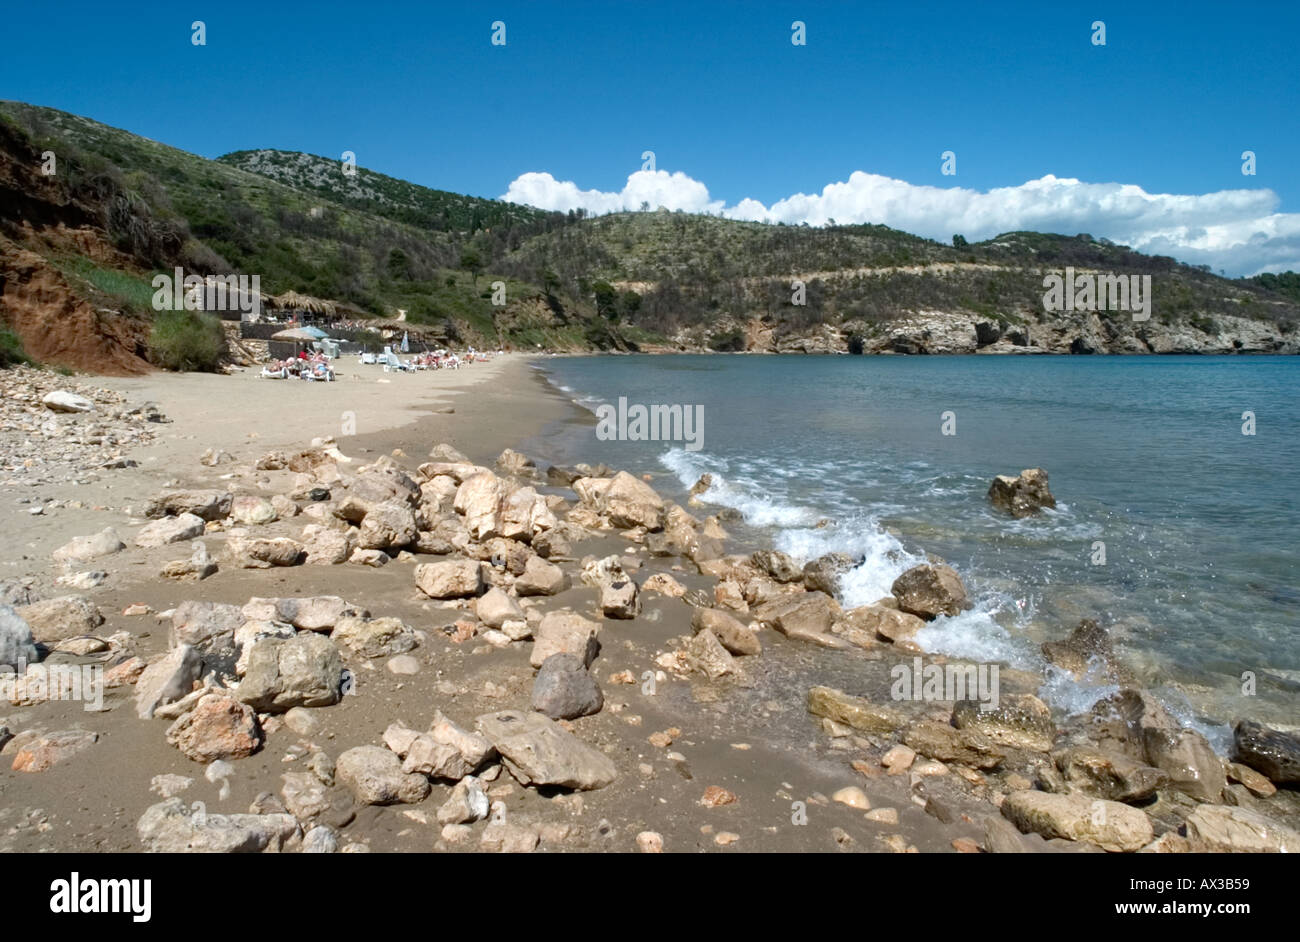 Sunj Beach, Lopud, Elaphite Islands (Elaphites), Dubrovnik Riviera, Dalmatian Coast, Croatia Stock Photo